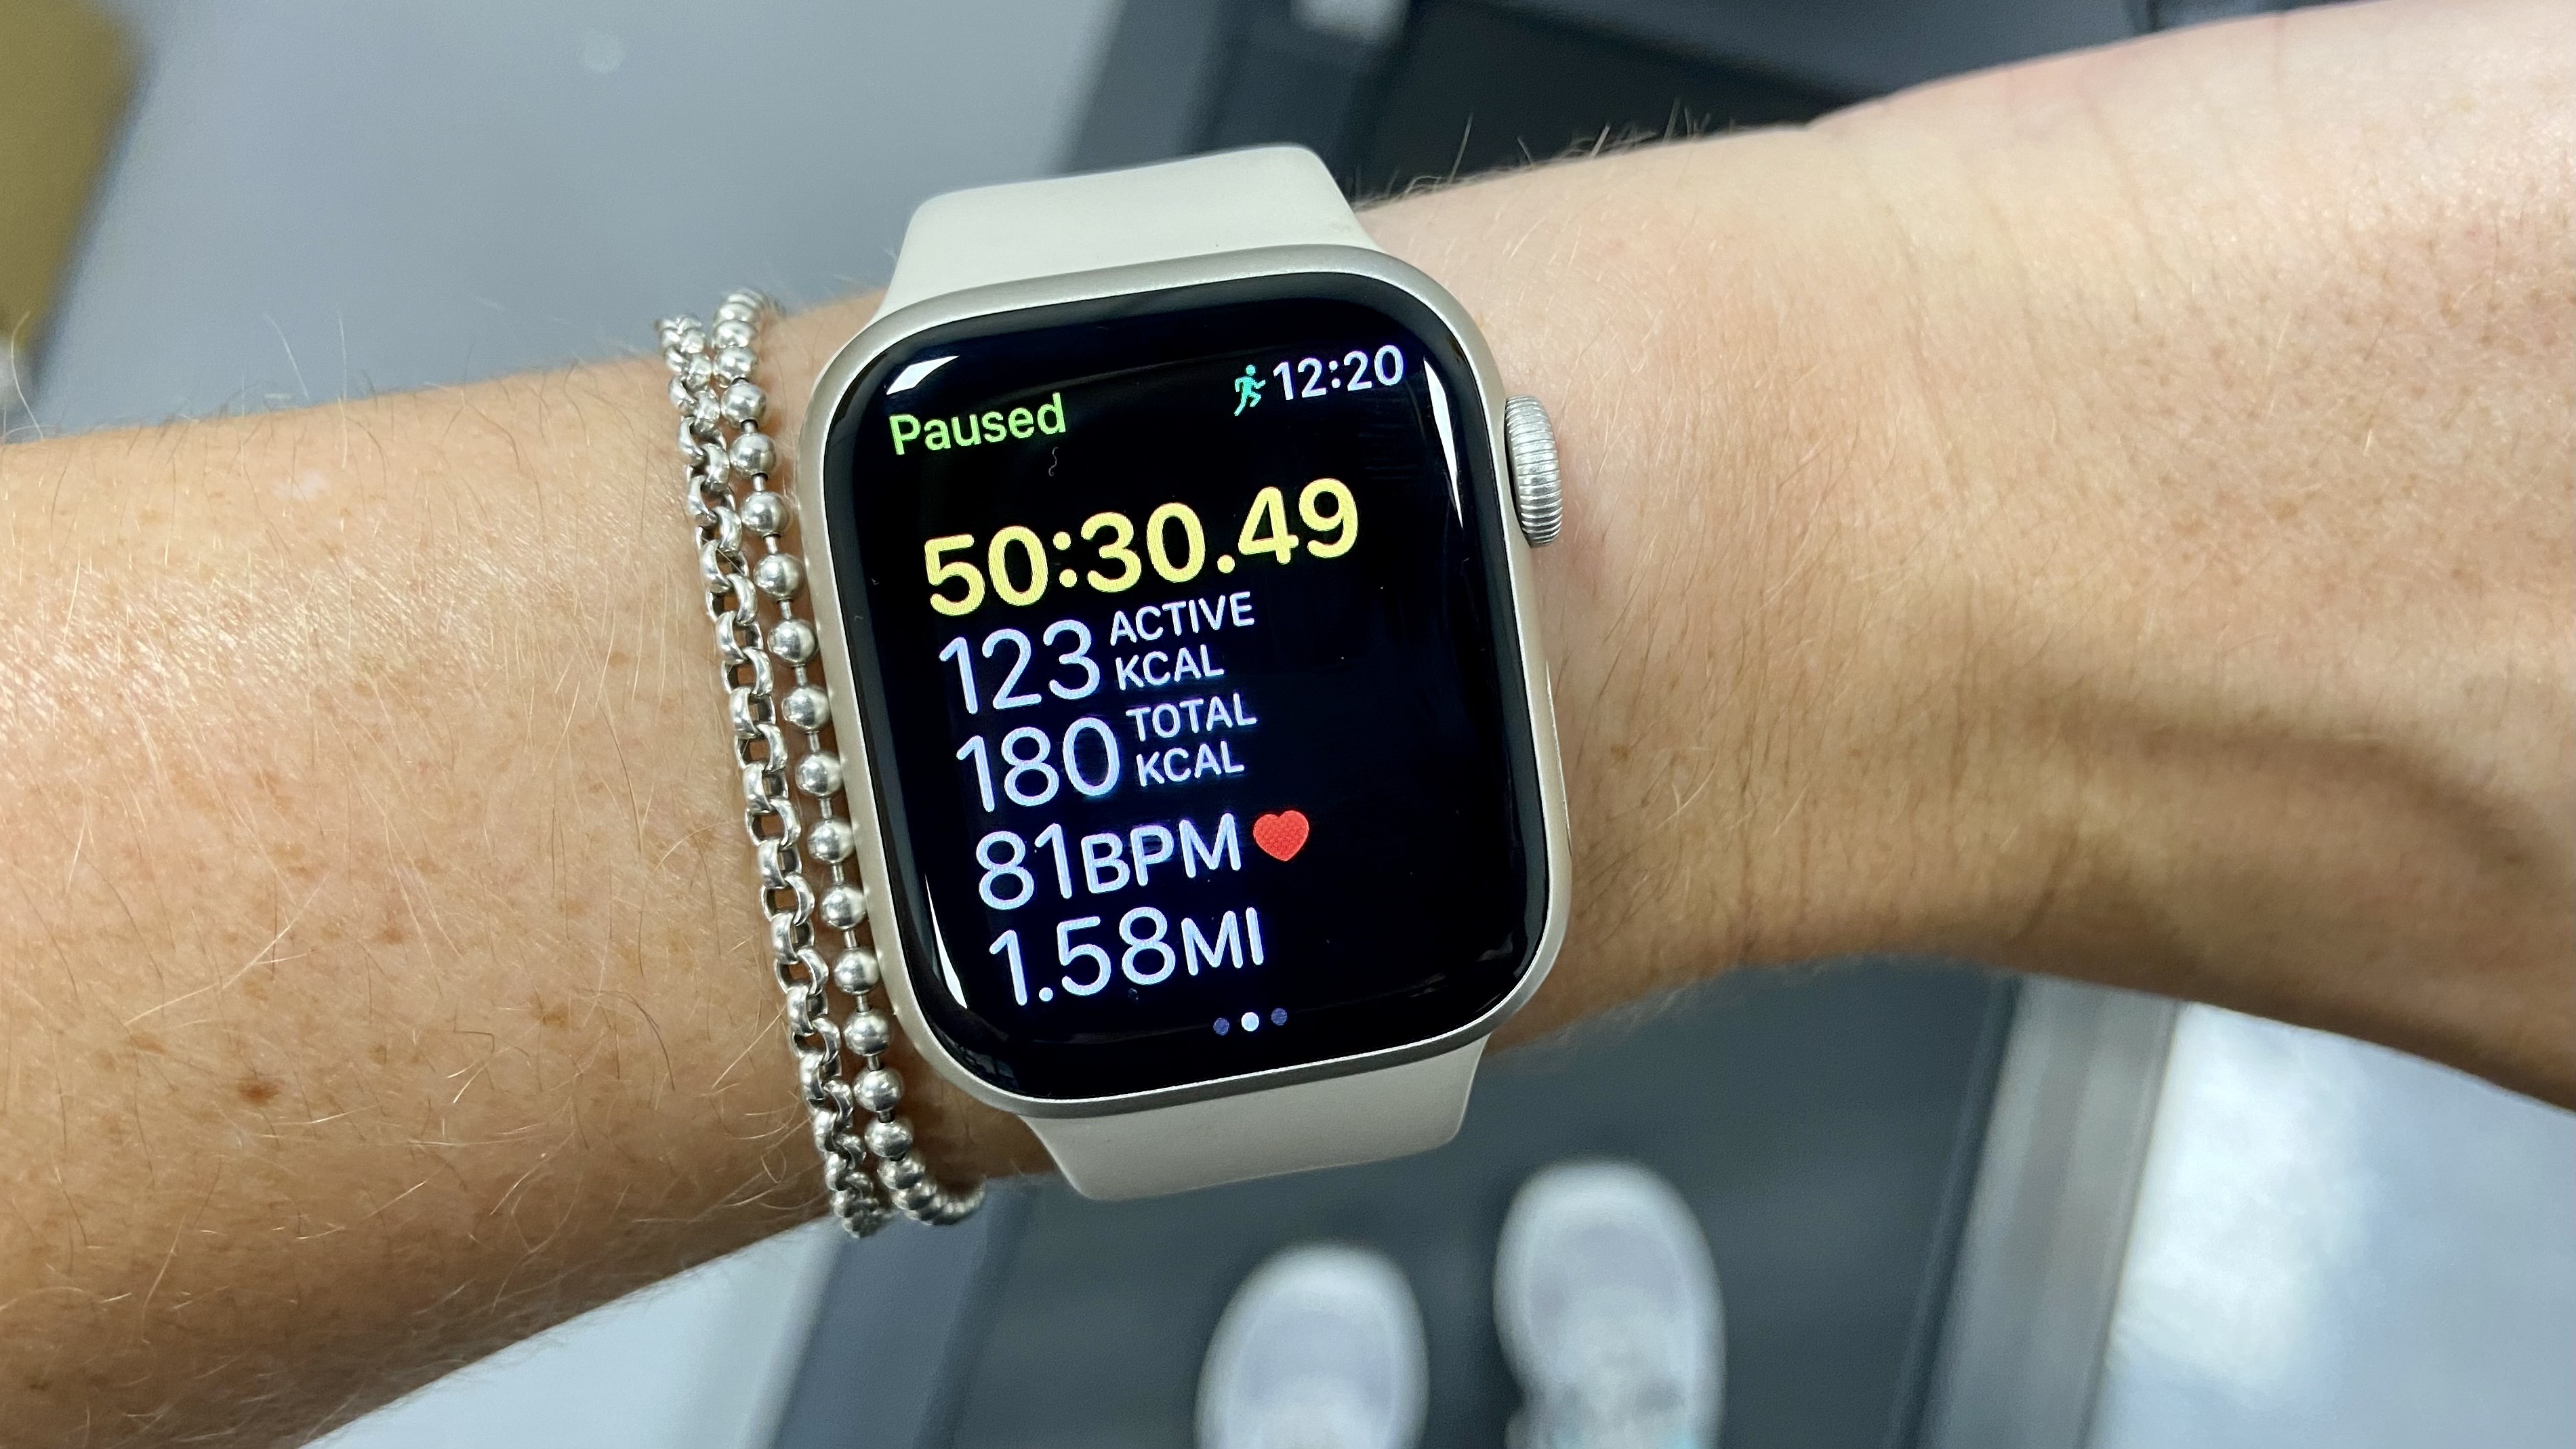 Screenshot of the Apple Watch after a walking workout